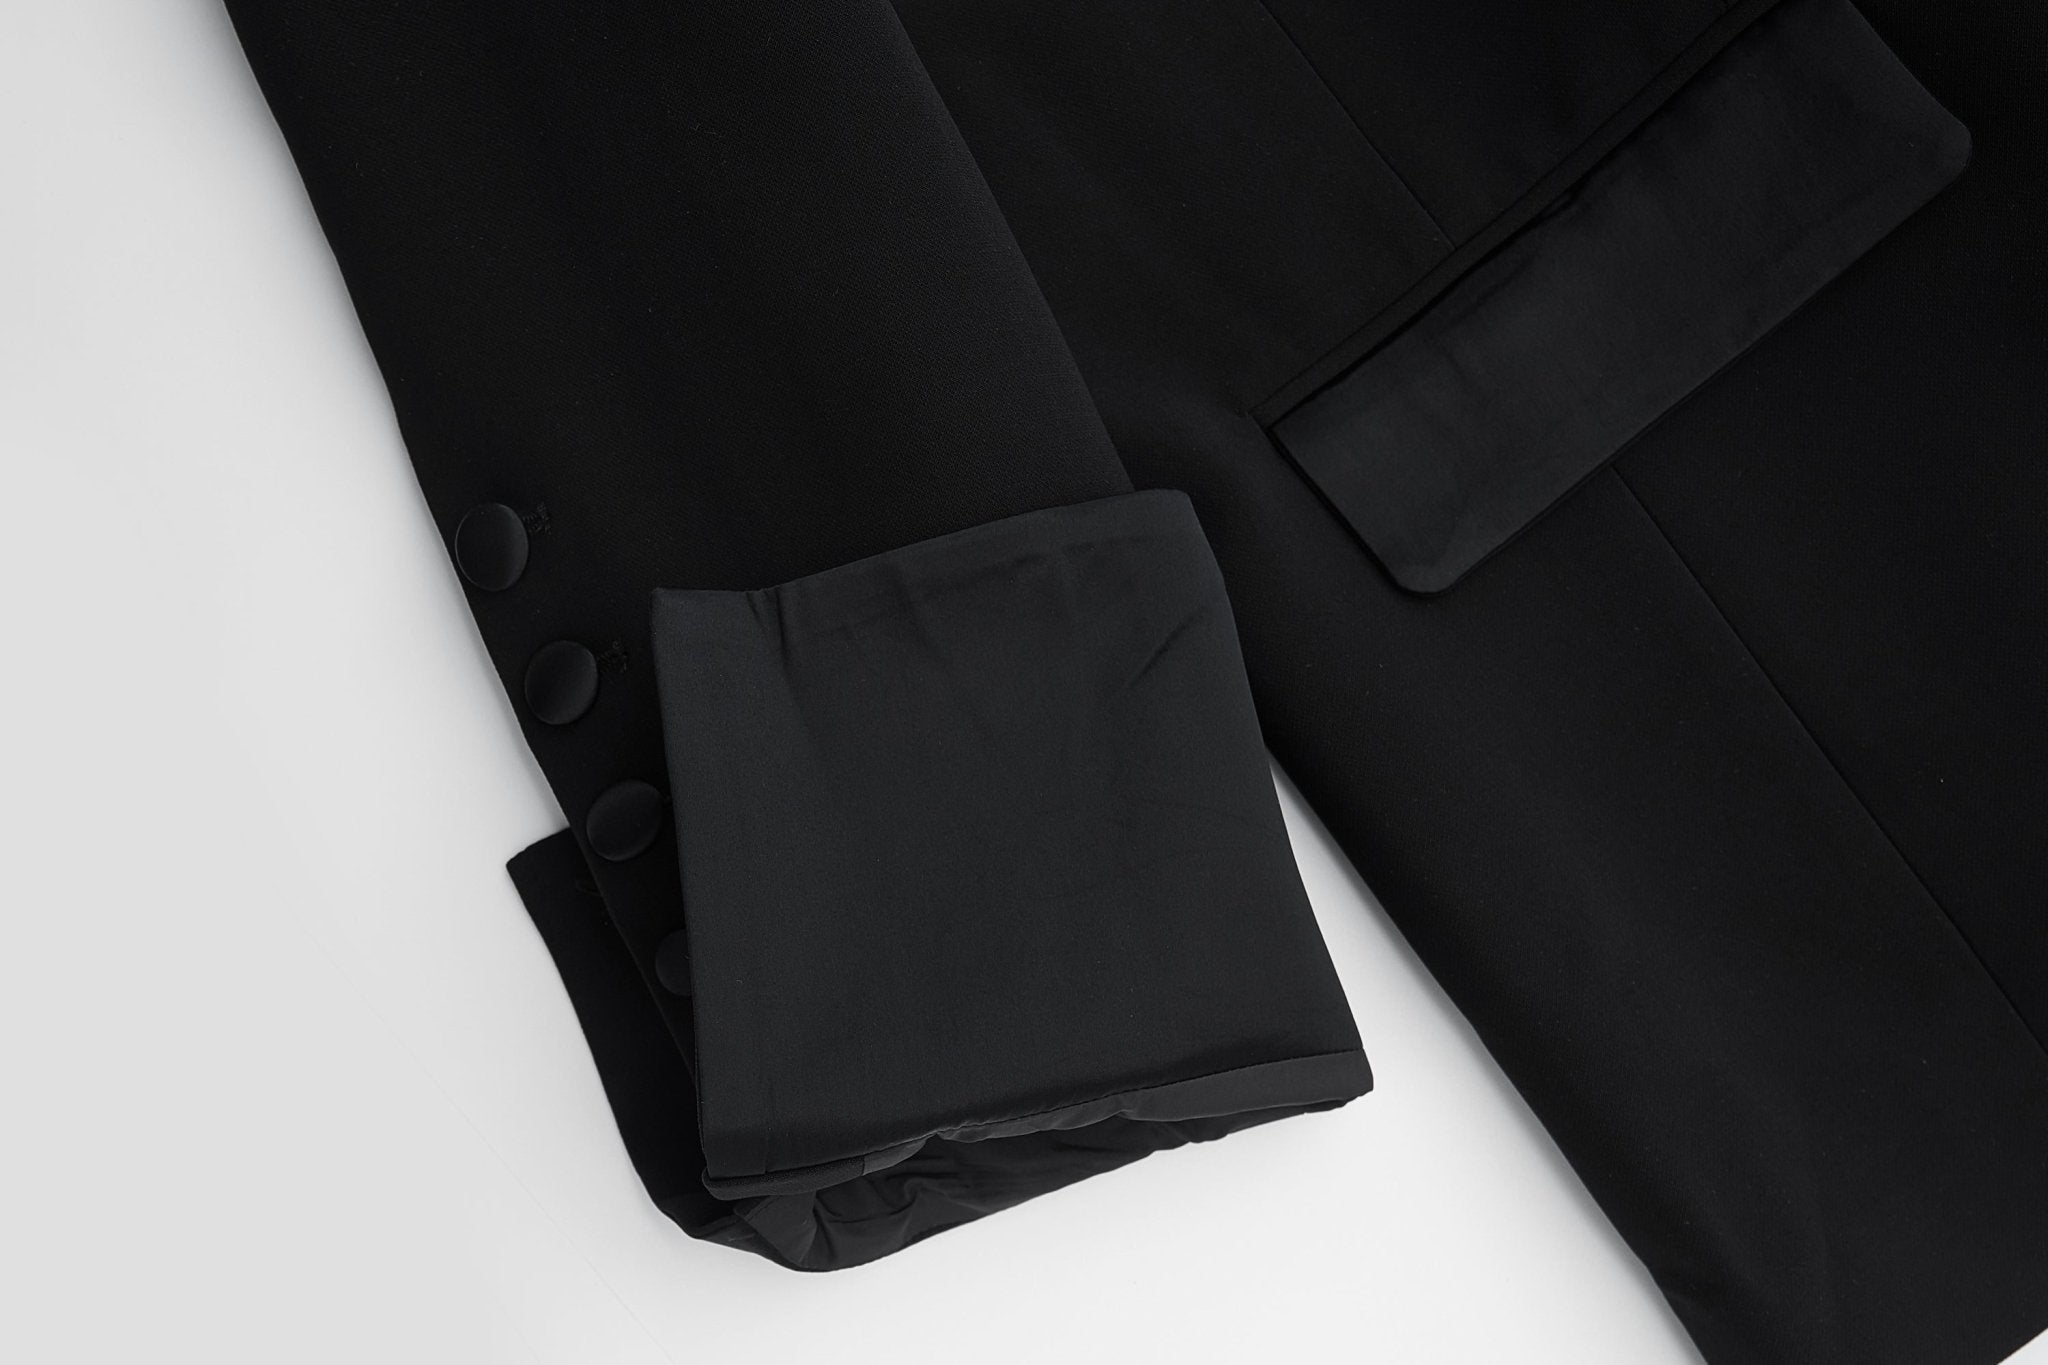 Maca Kaka Black Oversized Satin-Collar Blazer | MADA IN CHINA